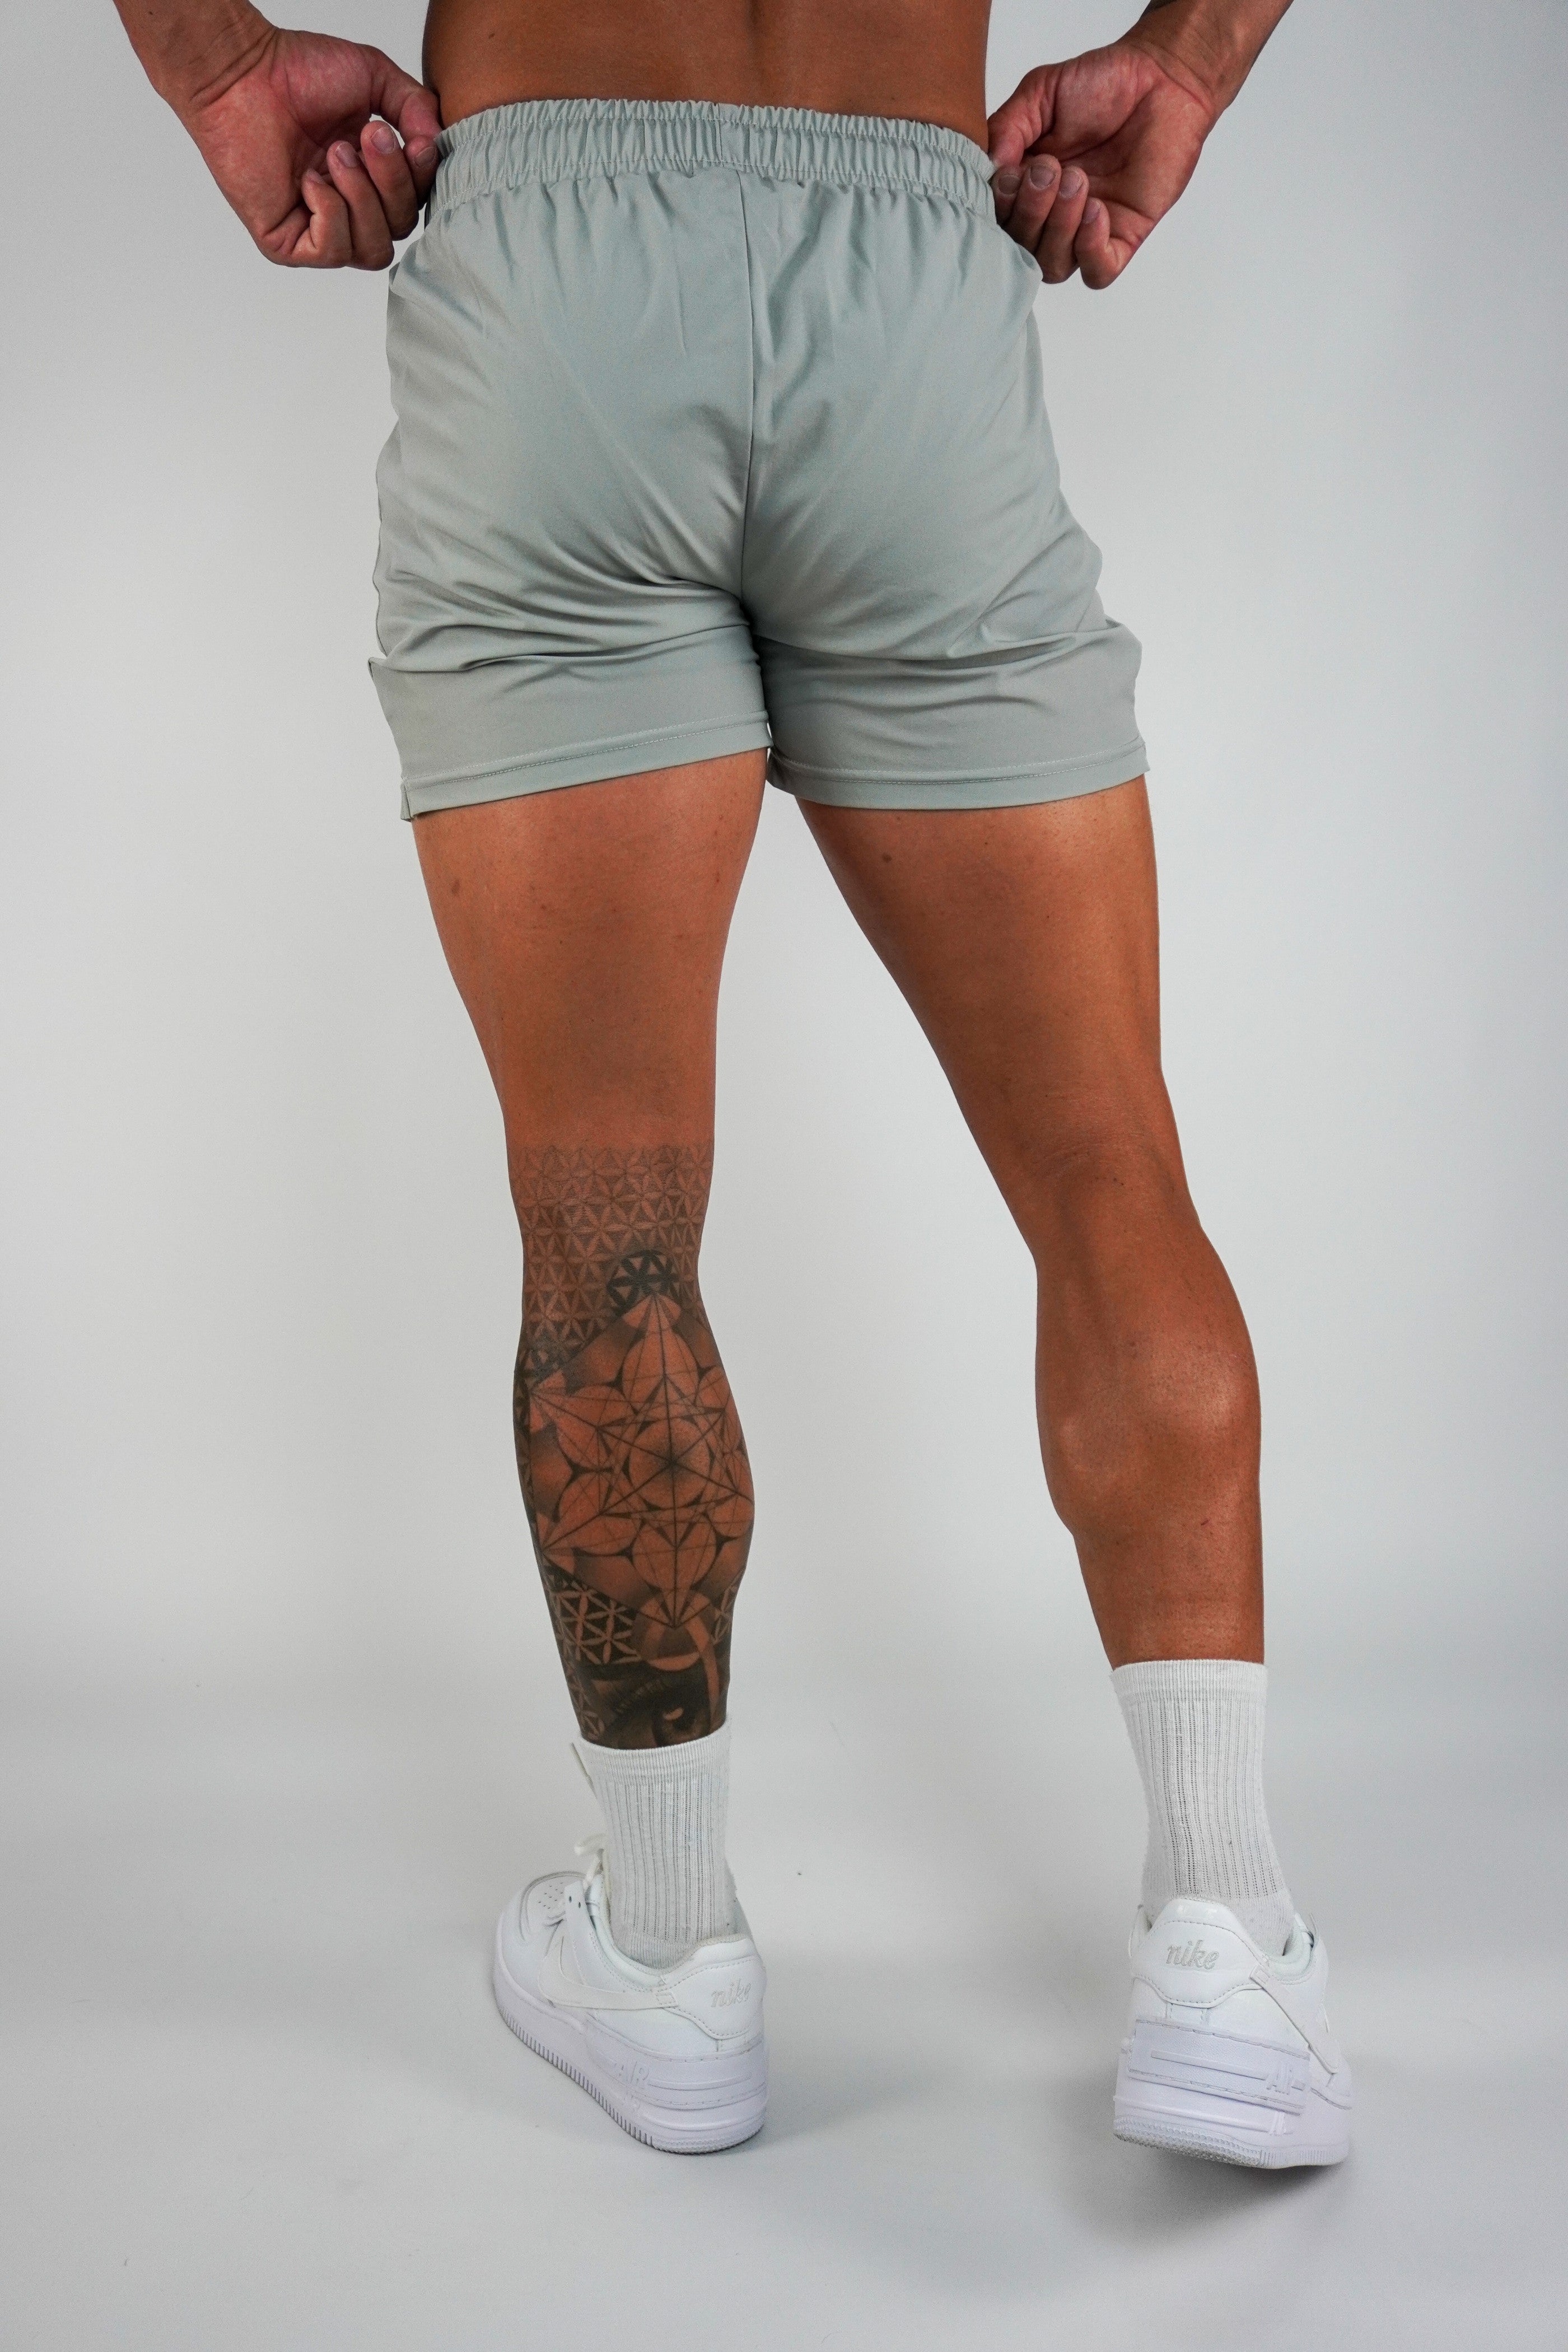 Roo Shorts - Grey - GYMROOS